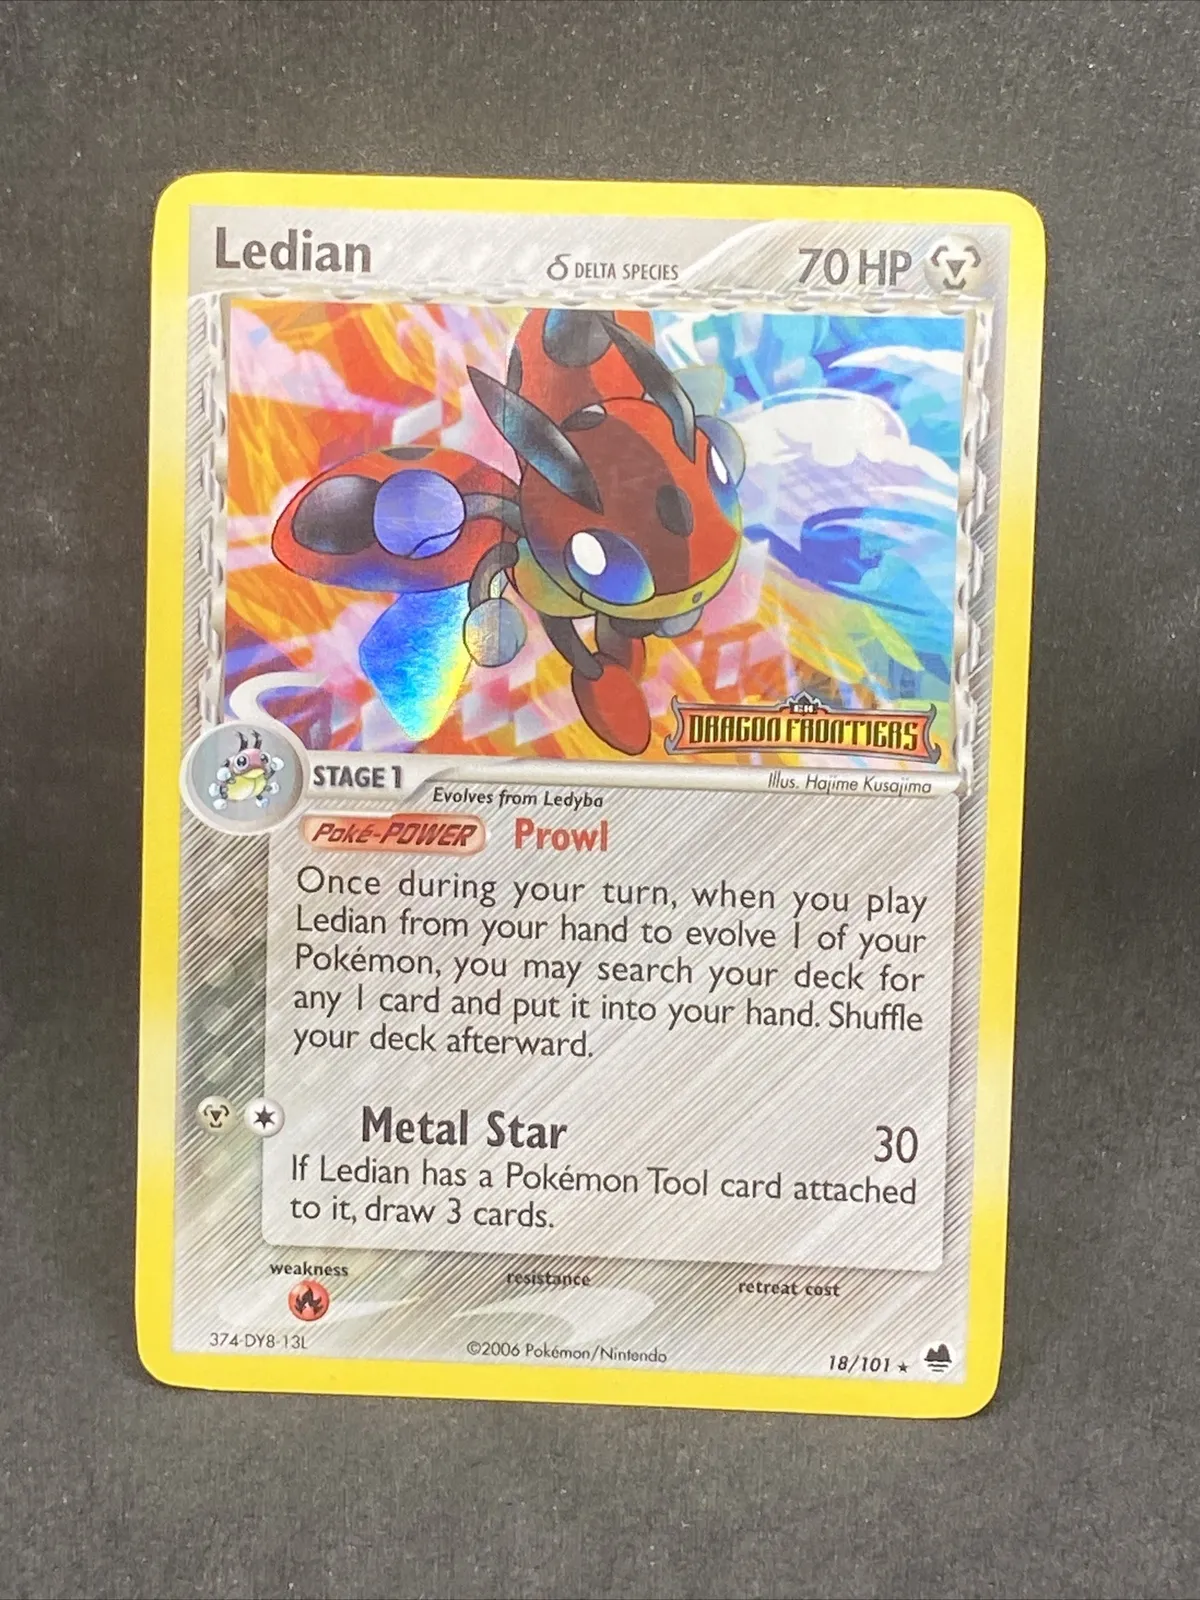 Pokémon TCG Ledian (Delta Species) 18/101 Dragon Frontiers Stamped Reverse Holo - Image 1